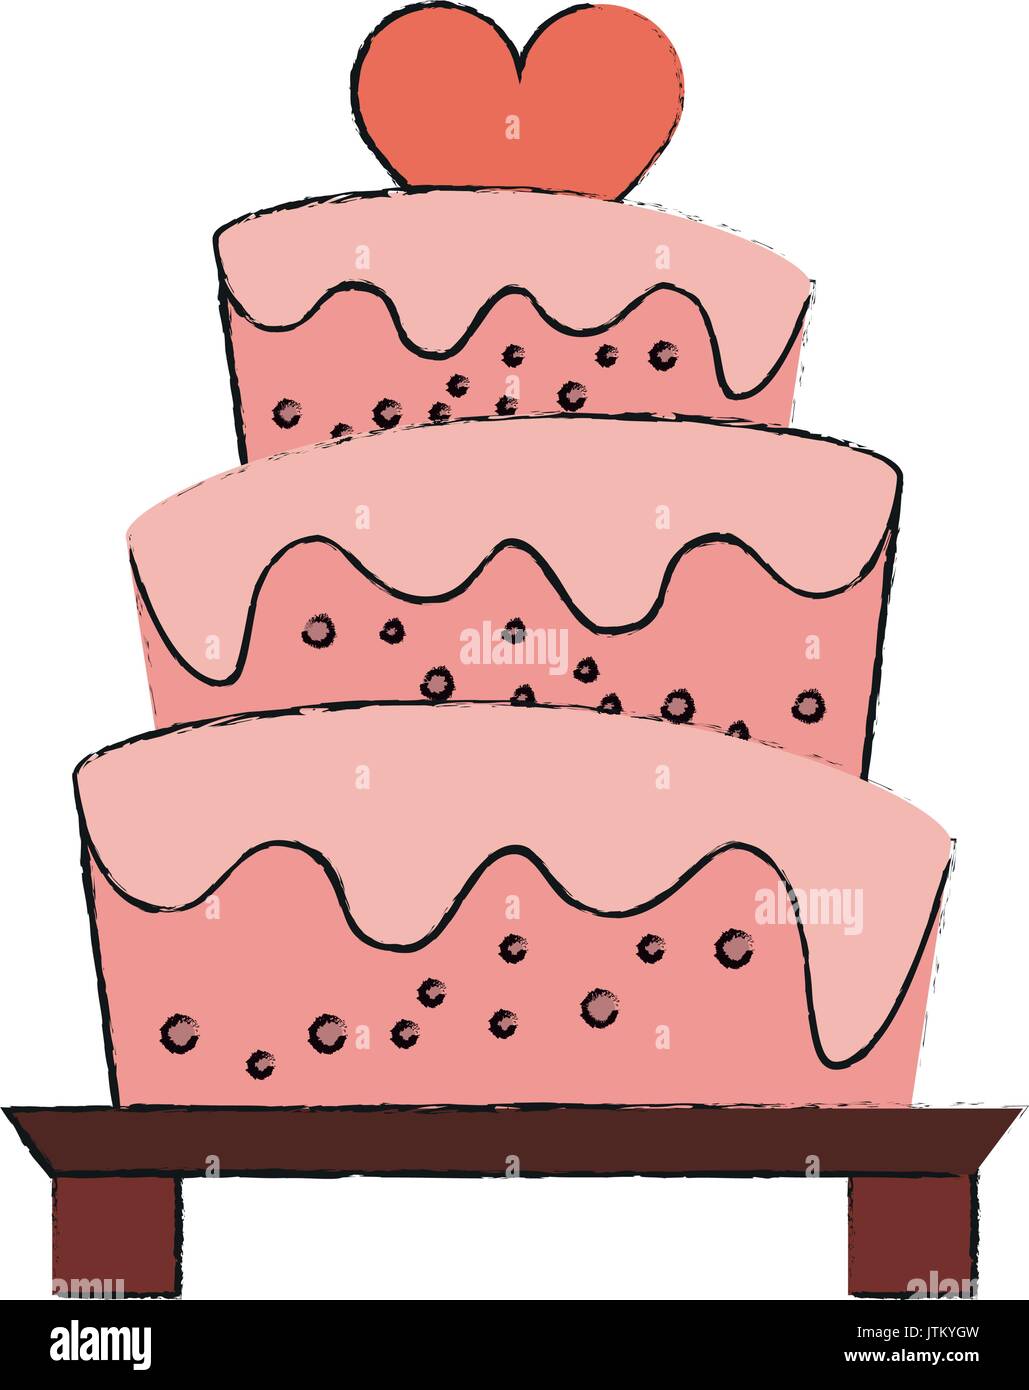 cake vector illustration Stock Vector Image & Art - Alamy